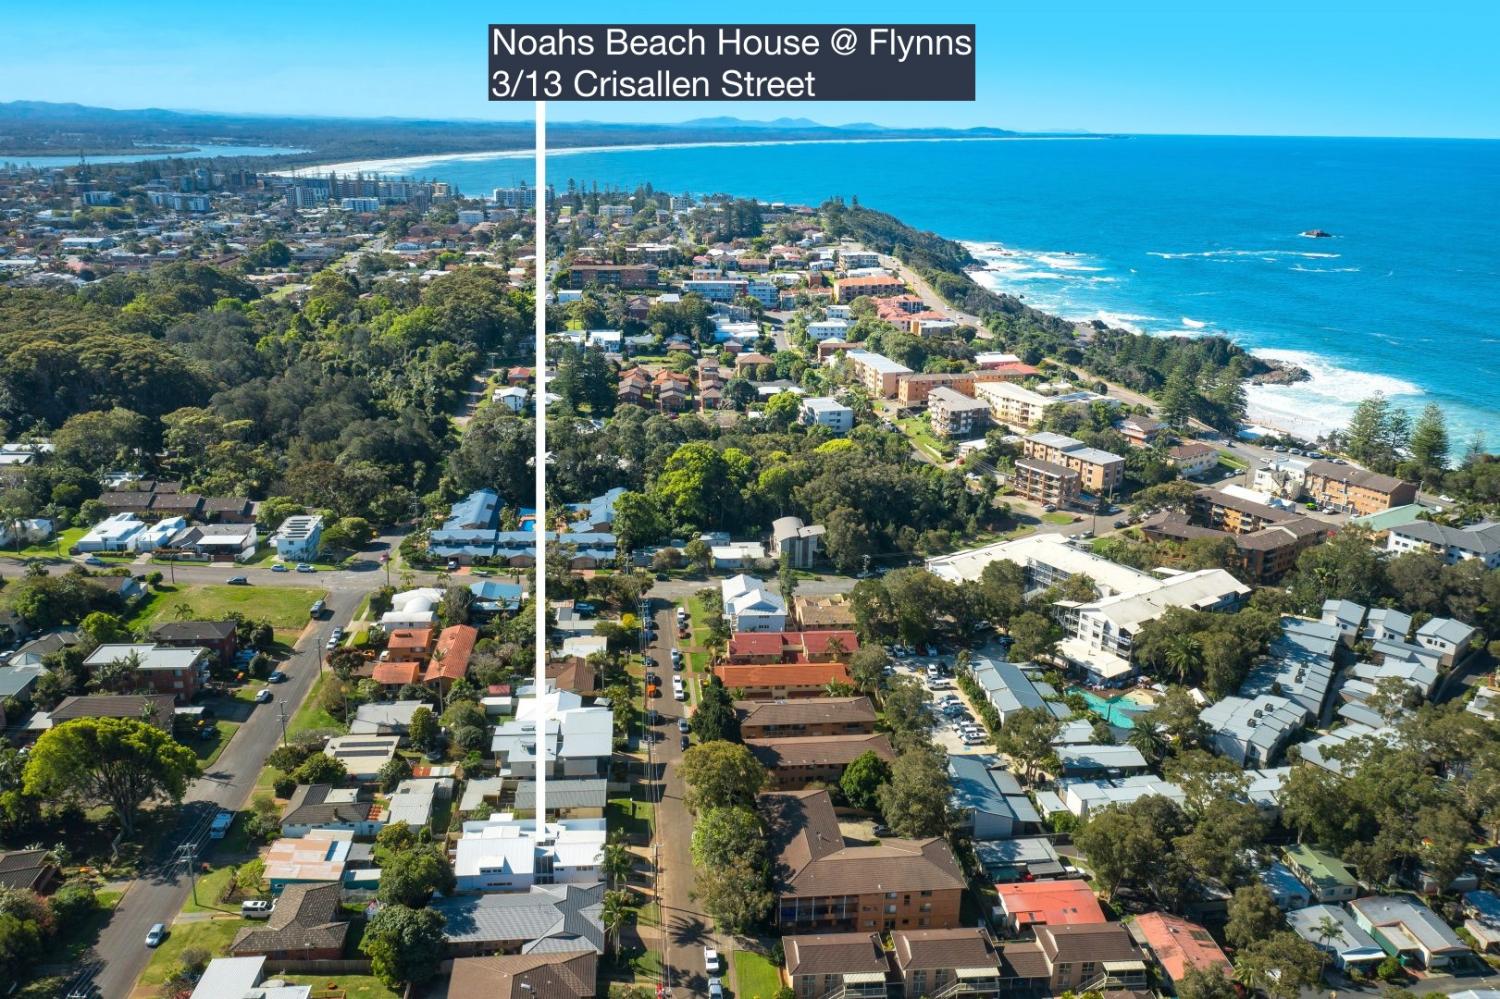 Birds eye view, close to Flynns beach, cafes and restaurants. Noahs Beach House